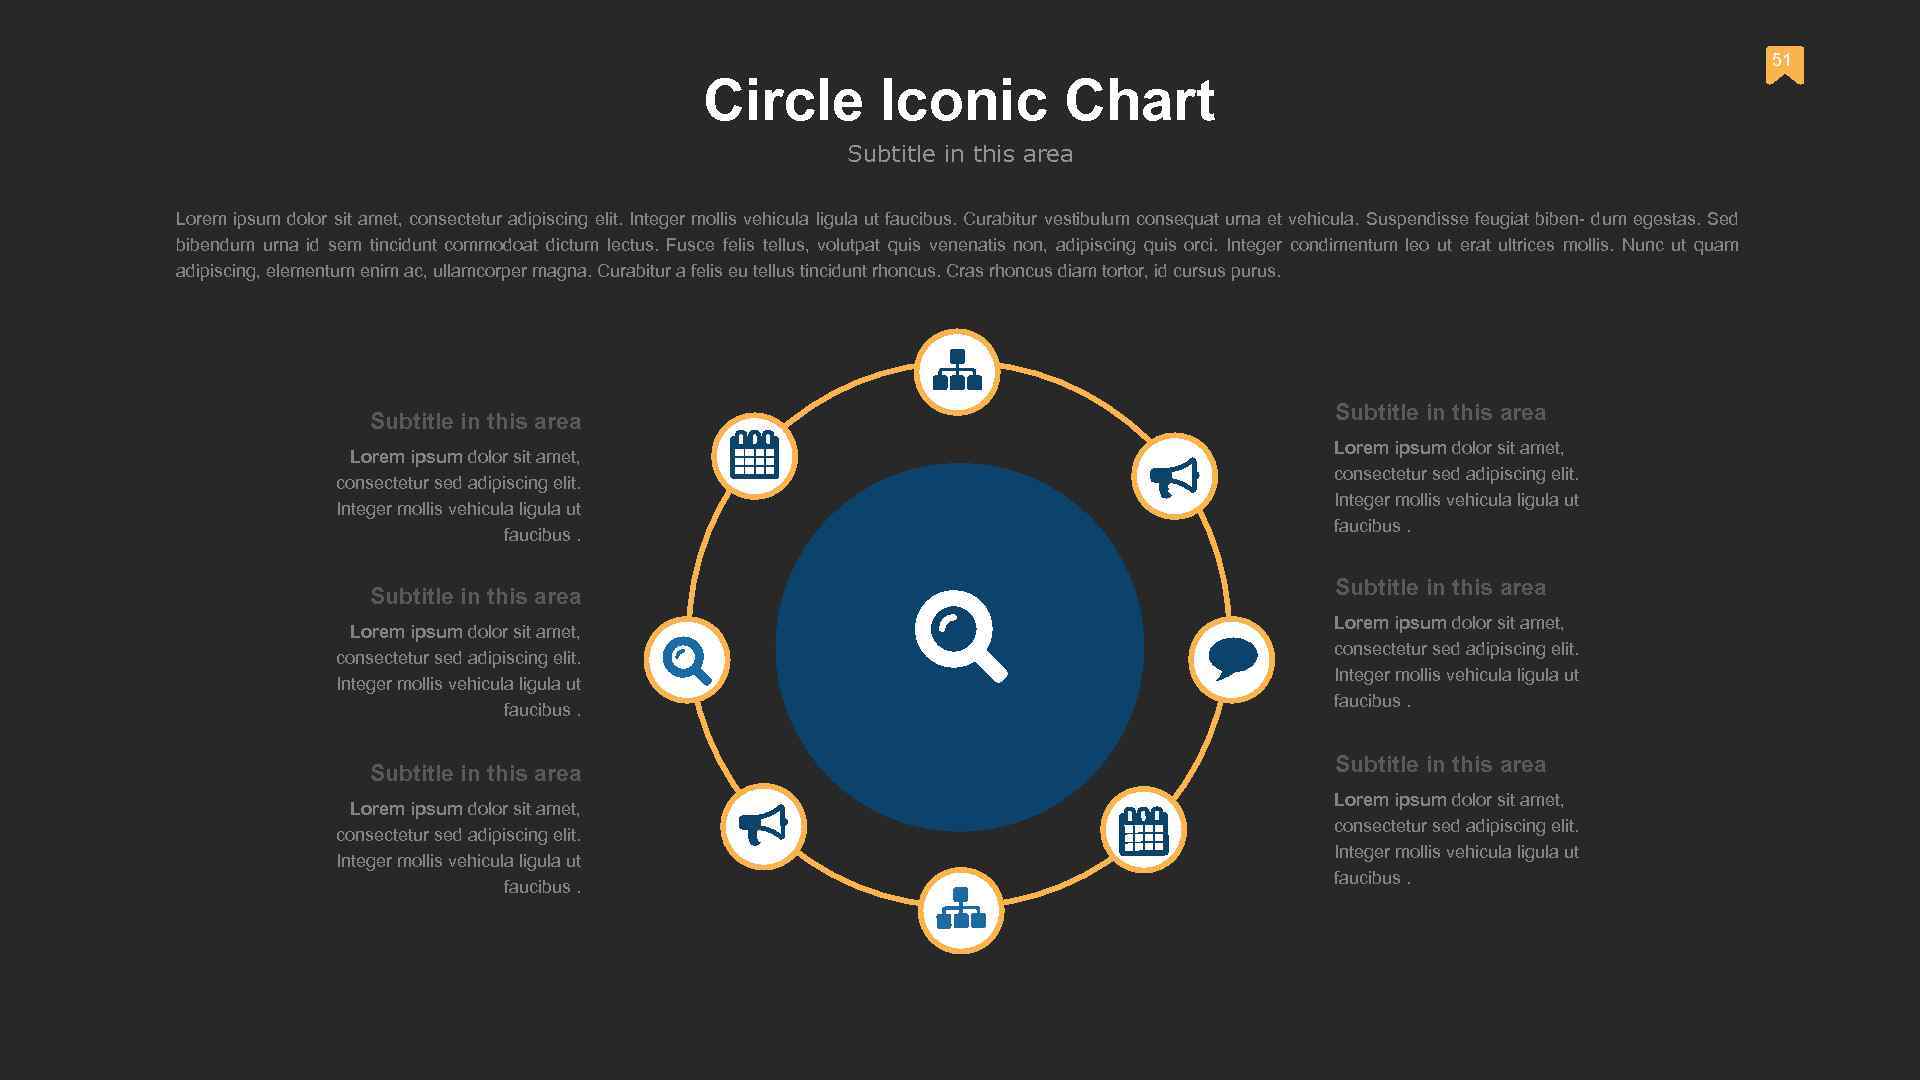 51 Circle Iconic Chart Subtitle in this area Lorem ipsum dolor sit amet, consectetur